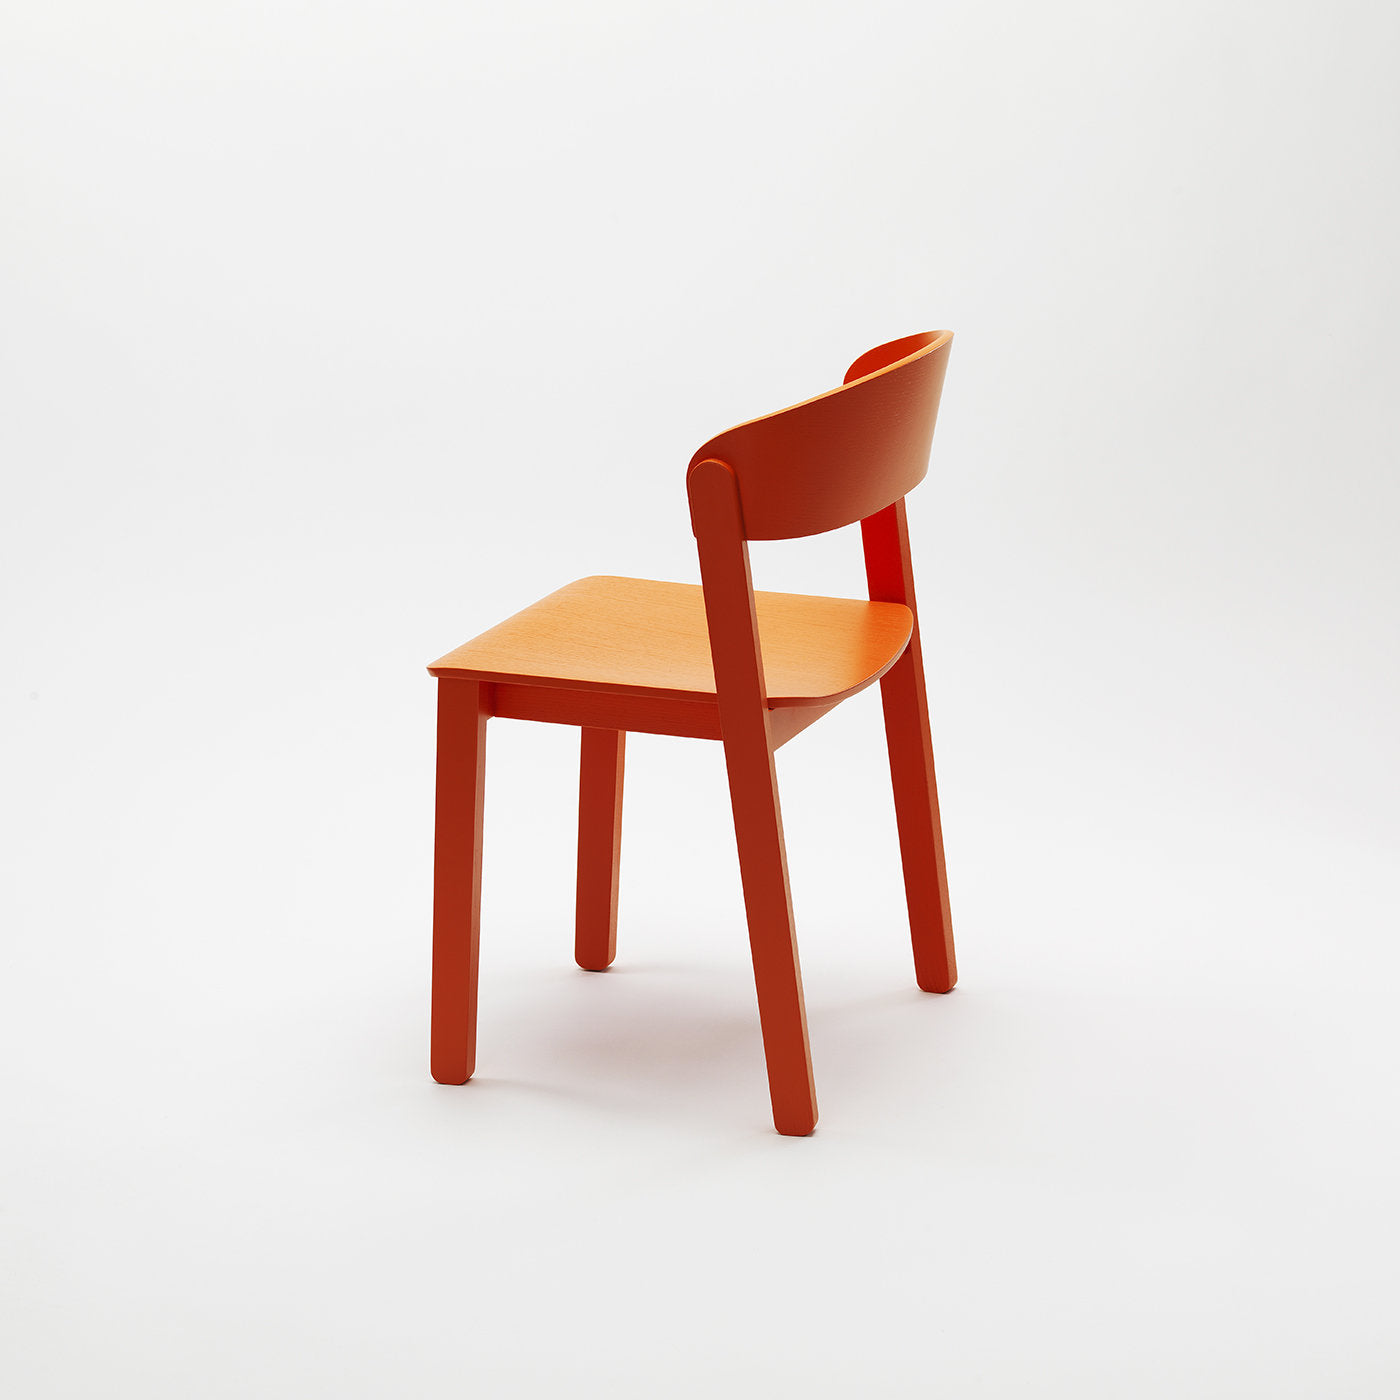 Set of 2 Salmon Orange Pur Chairs by Note Design Studio - Alternative view 1